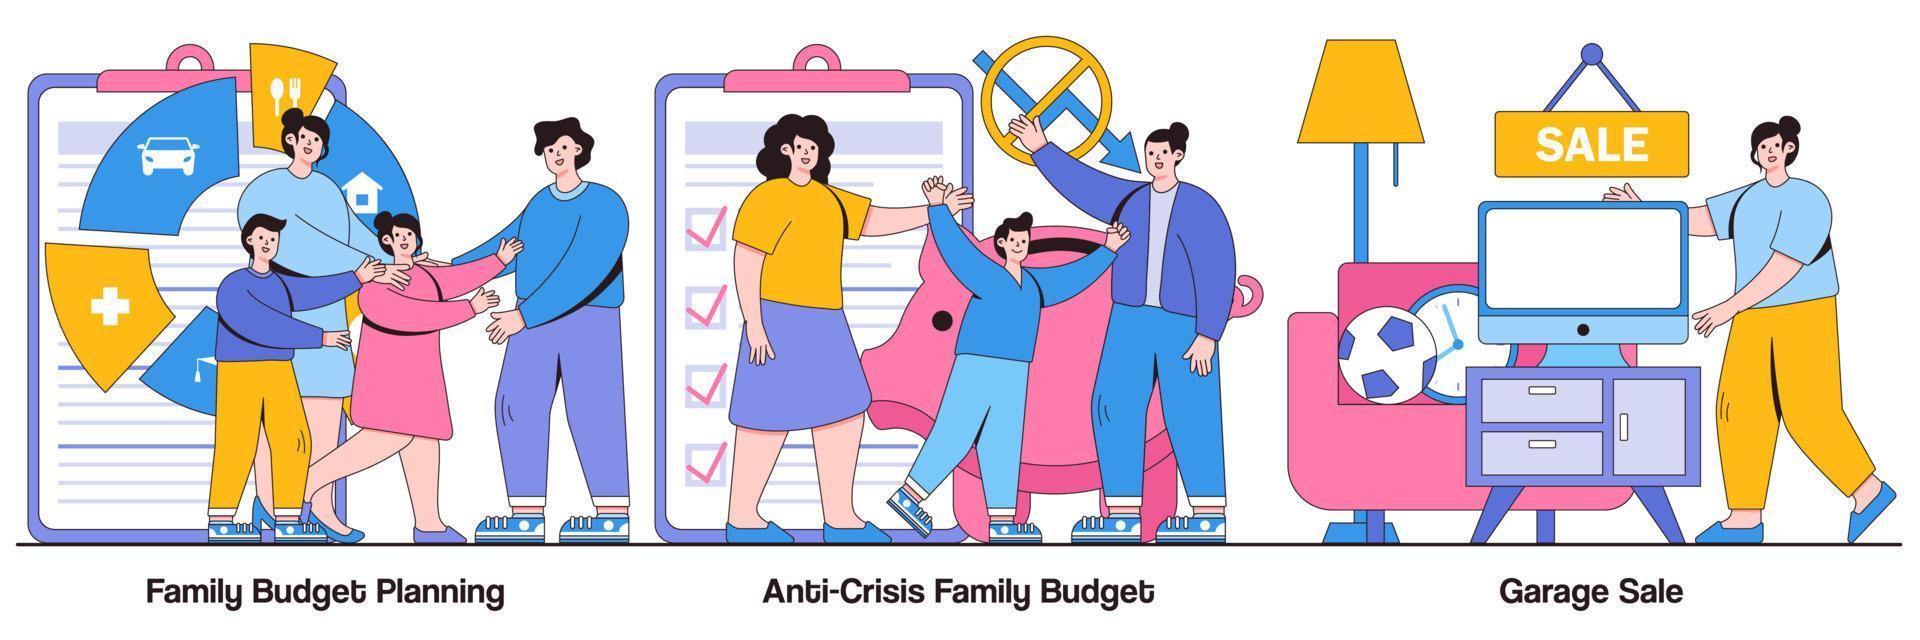 Familienbudgetplanung, Anti-Krisen-Familienbudget und illustriertes Flohmarktpaket vektor